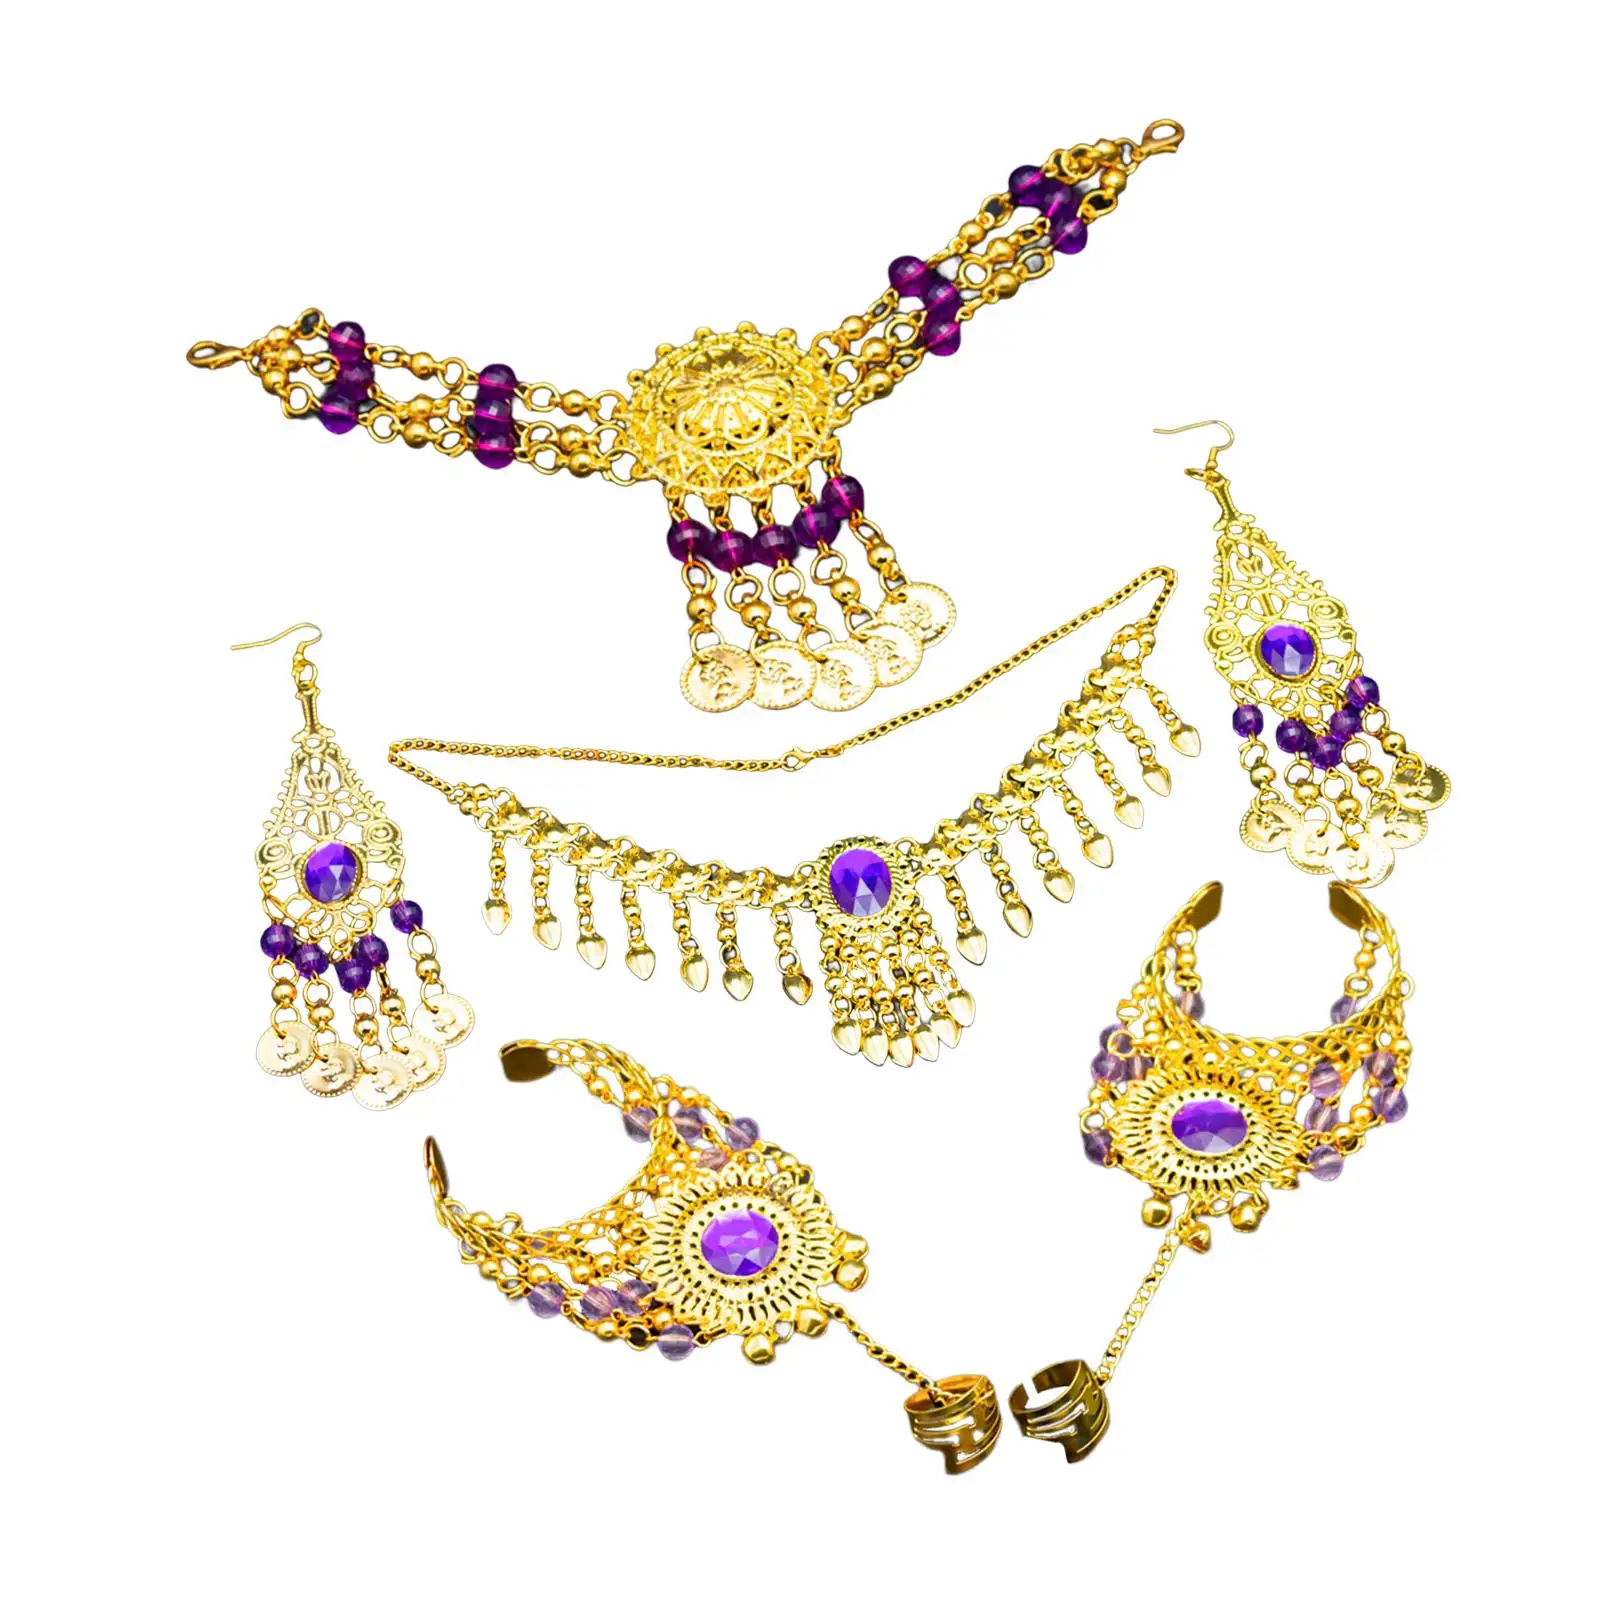 Belly Dance Jewelry Set Belly Dance Accessory Headwear Necklace Earrings Rings for Women Girl Cosplay Holidays